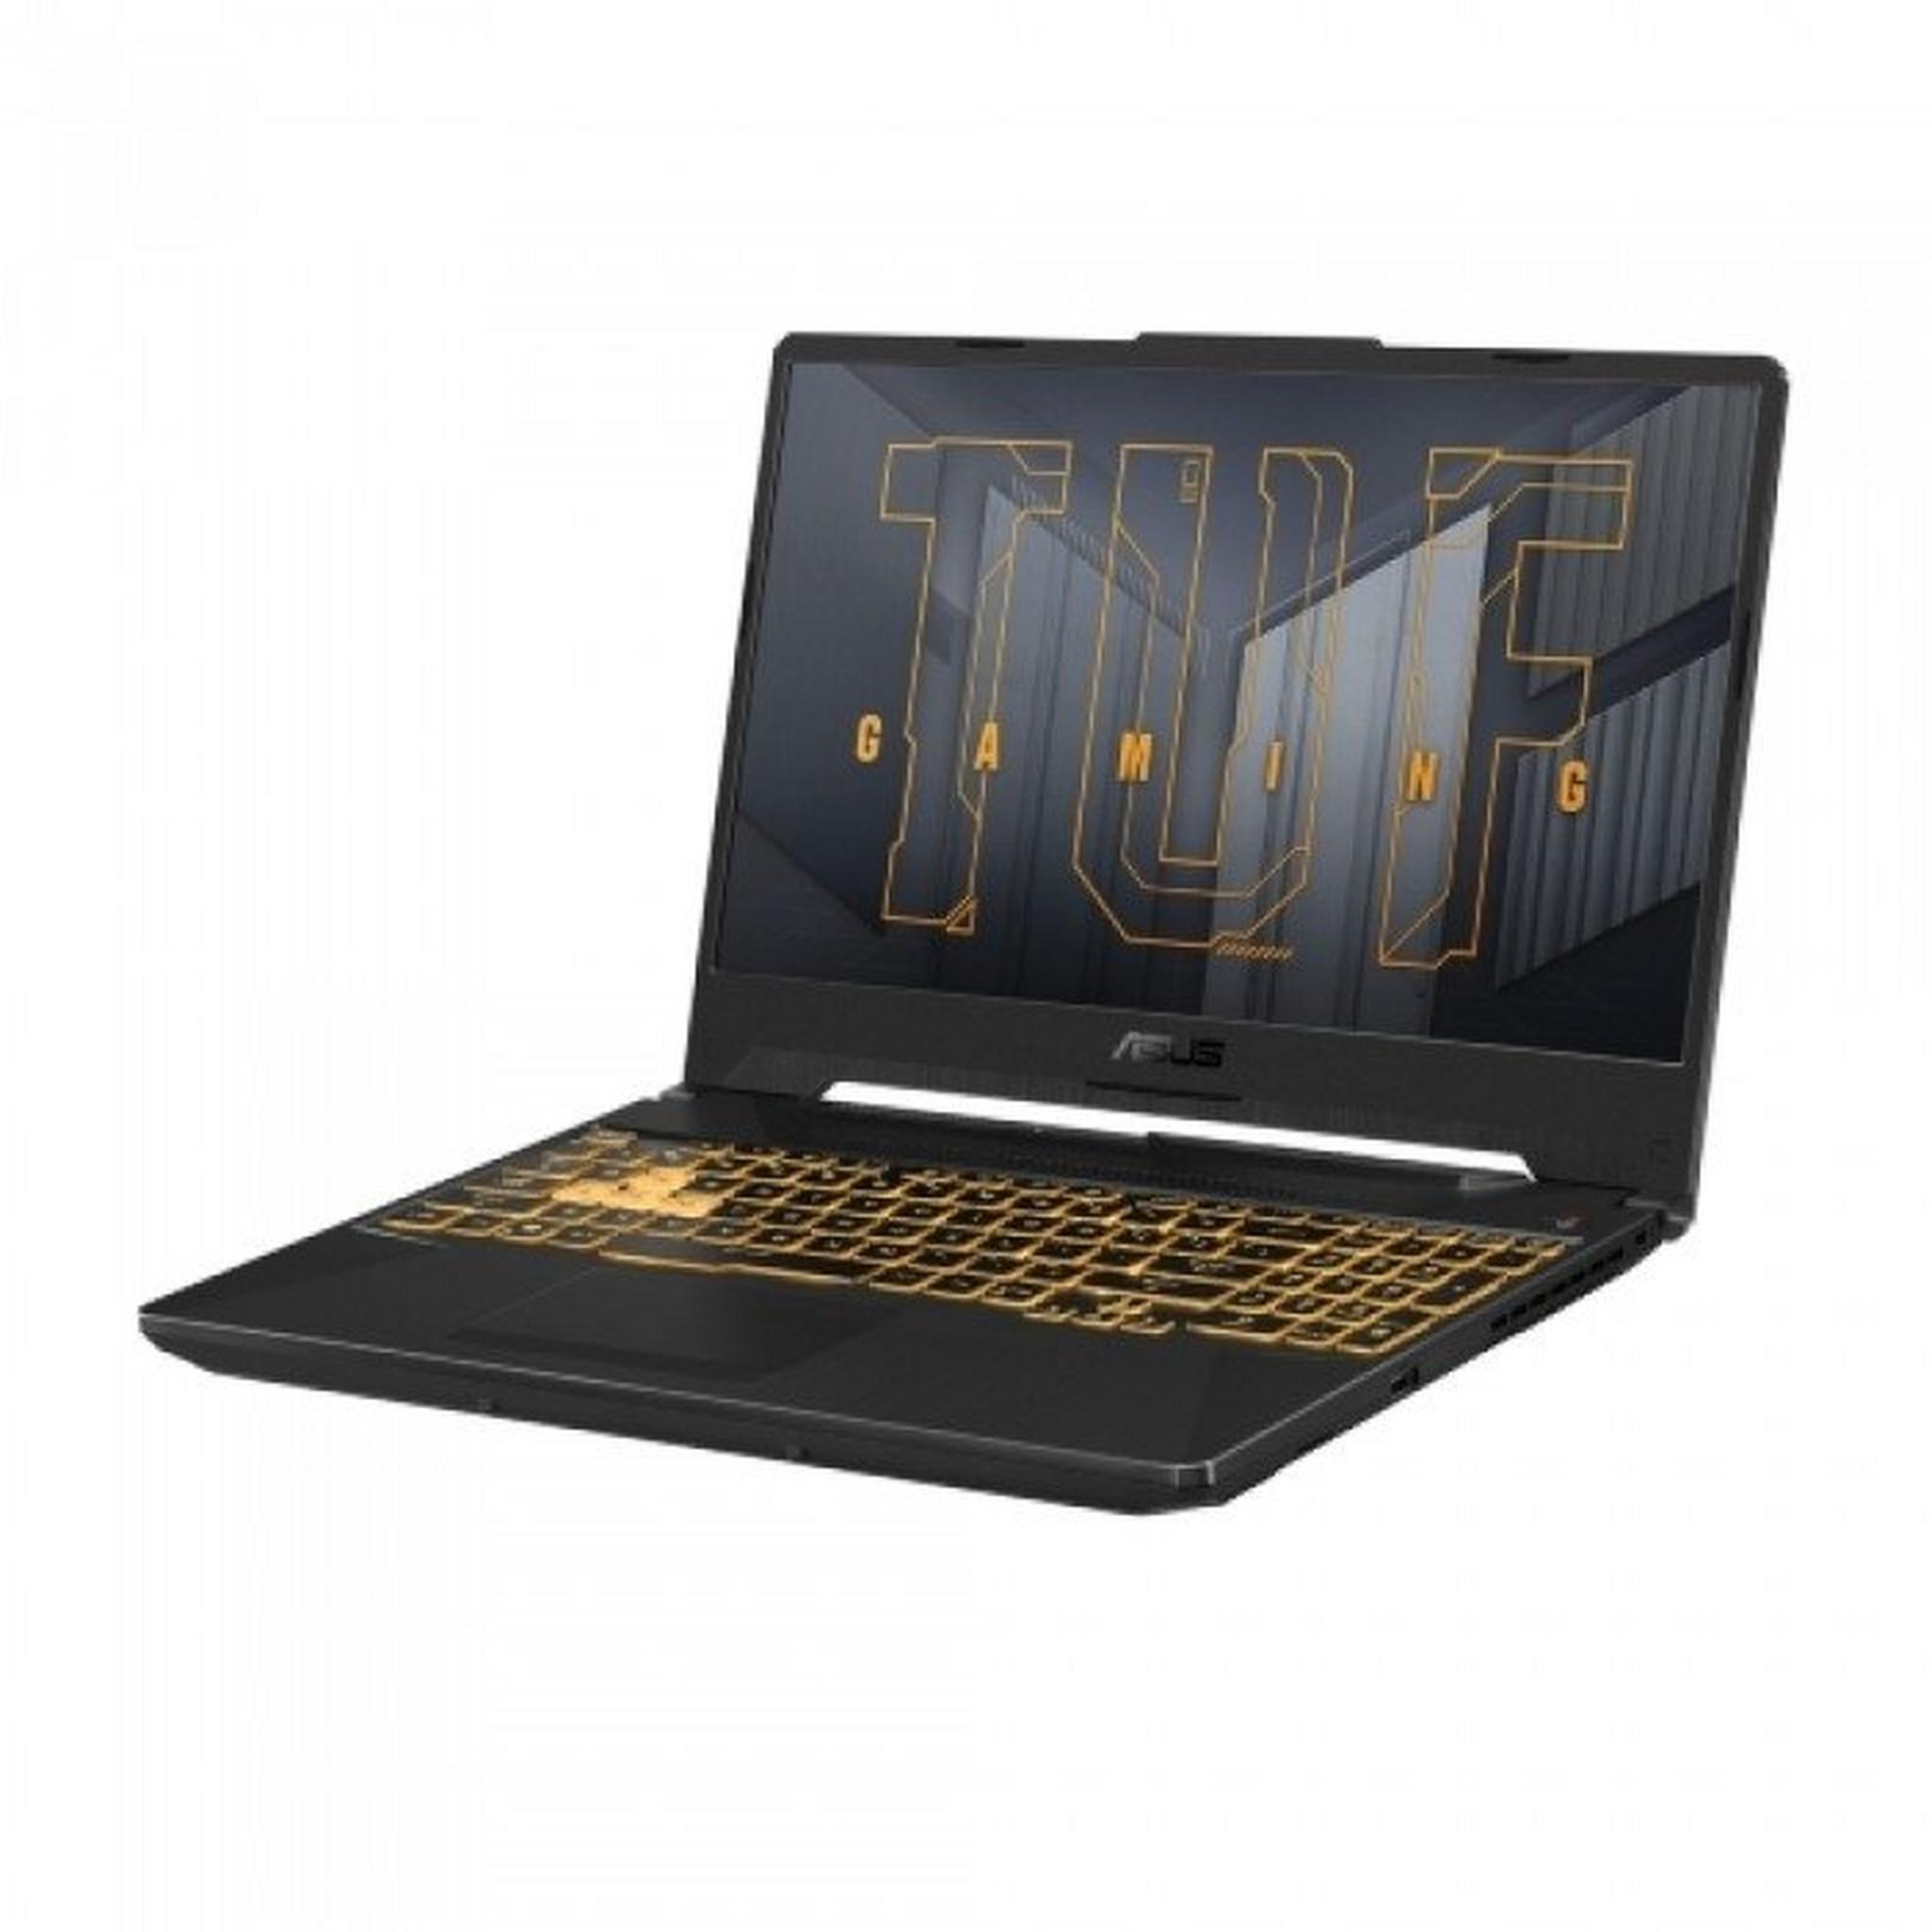 Asus TUF Gaming F15 (2021), Intel Core i7, Nvidia Geforce RTX 3060 6GB, RAM 16GB, SSD 1TB, 15.6" FHD 240Hz Gaming Laptop - Eclipse Gray (FX506HM-AZ157T)